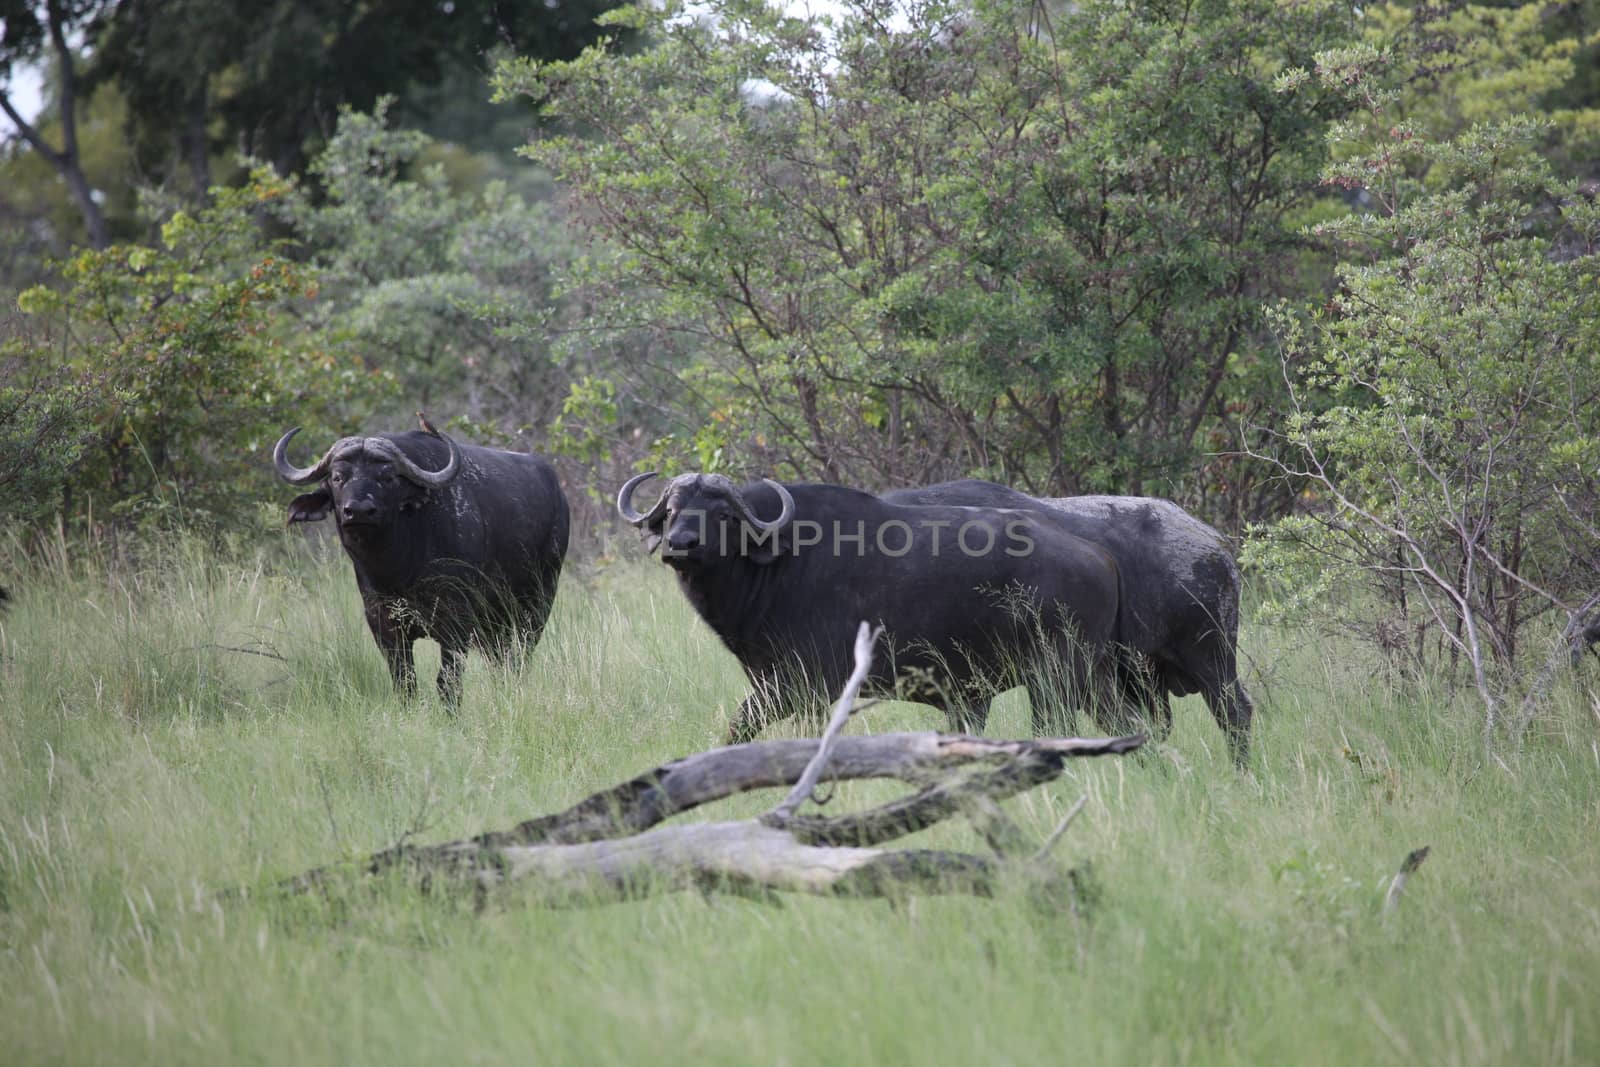 Wild Africa Botswana savannah African Buffalo animal mammal by desant7474